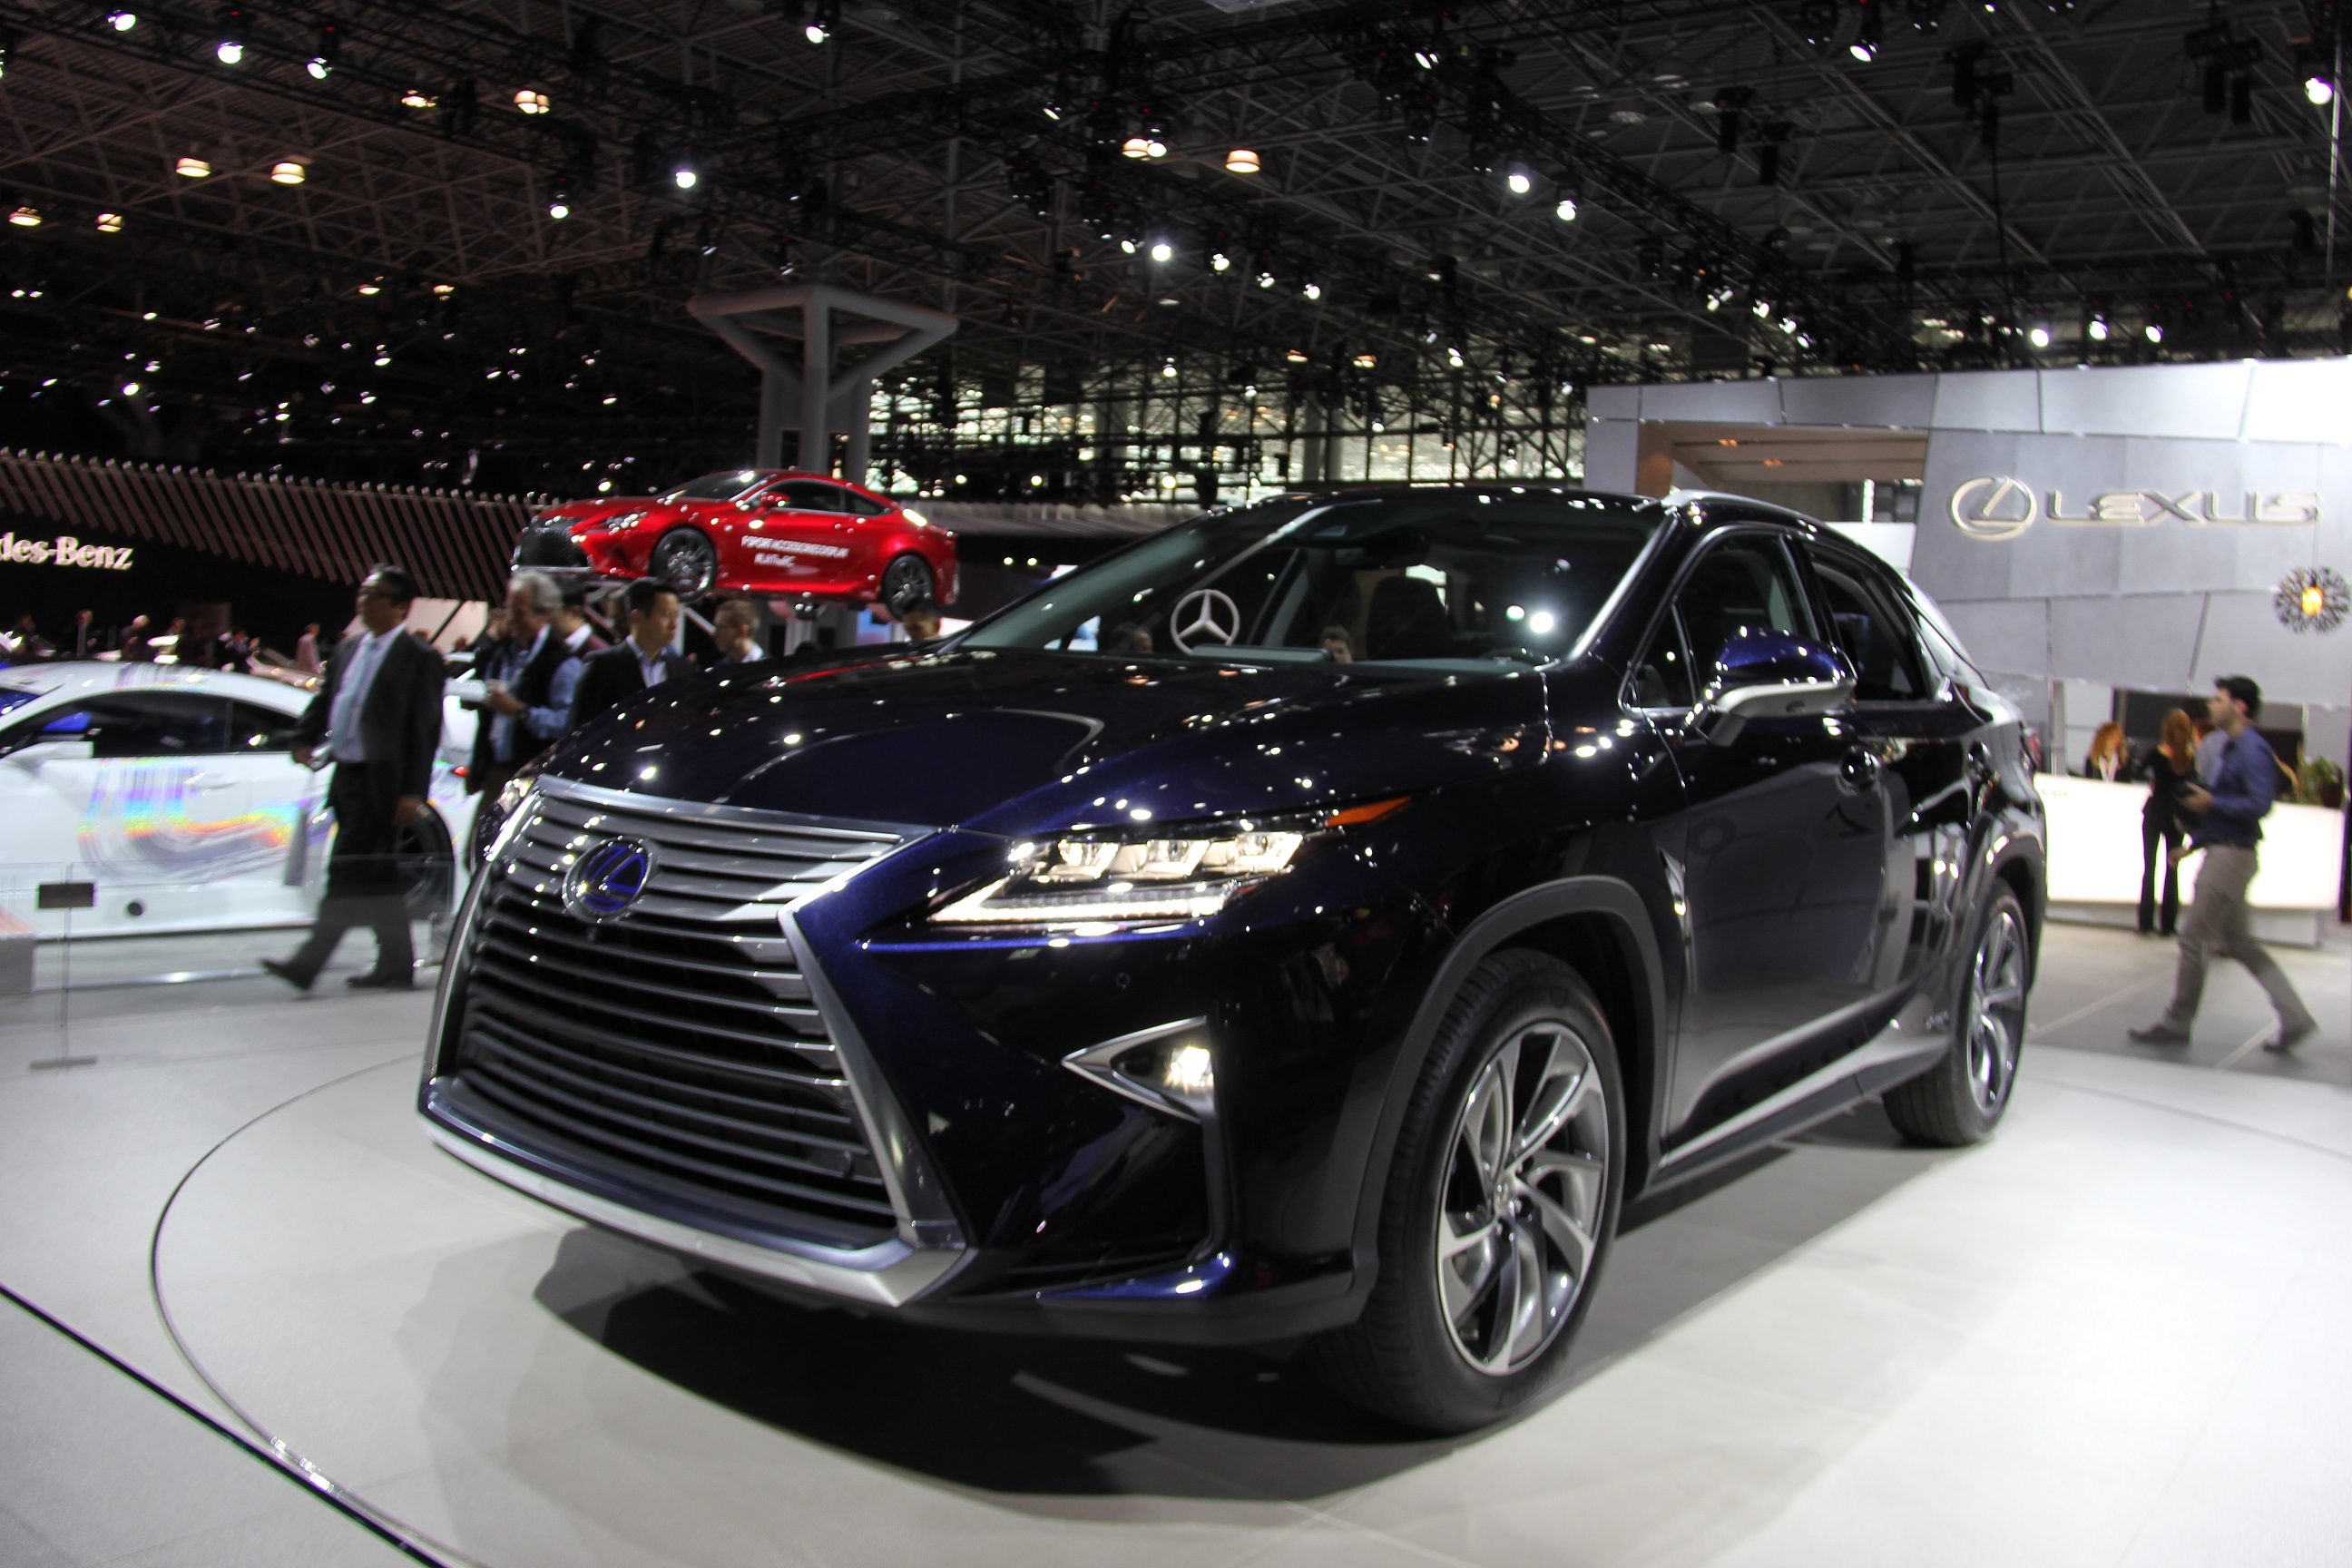 2016 Lexus RX at New York International Auto Show (13